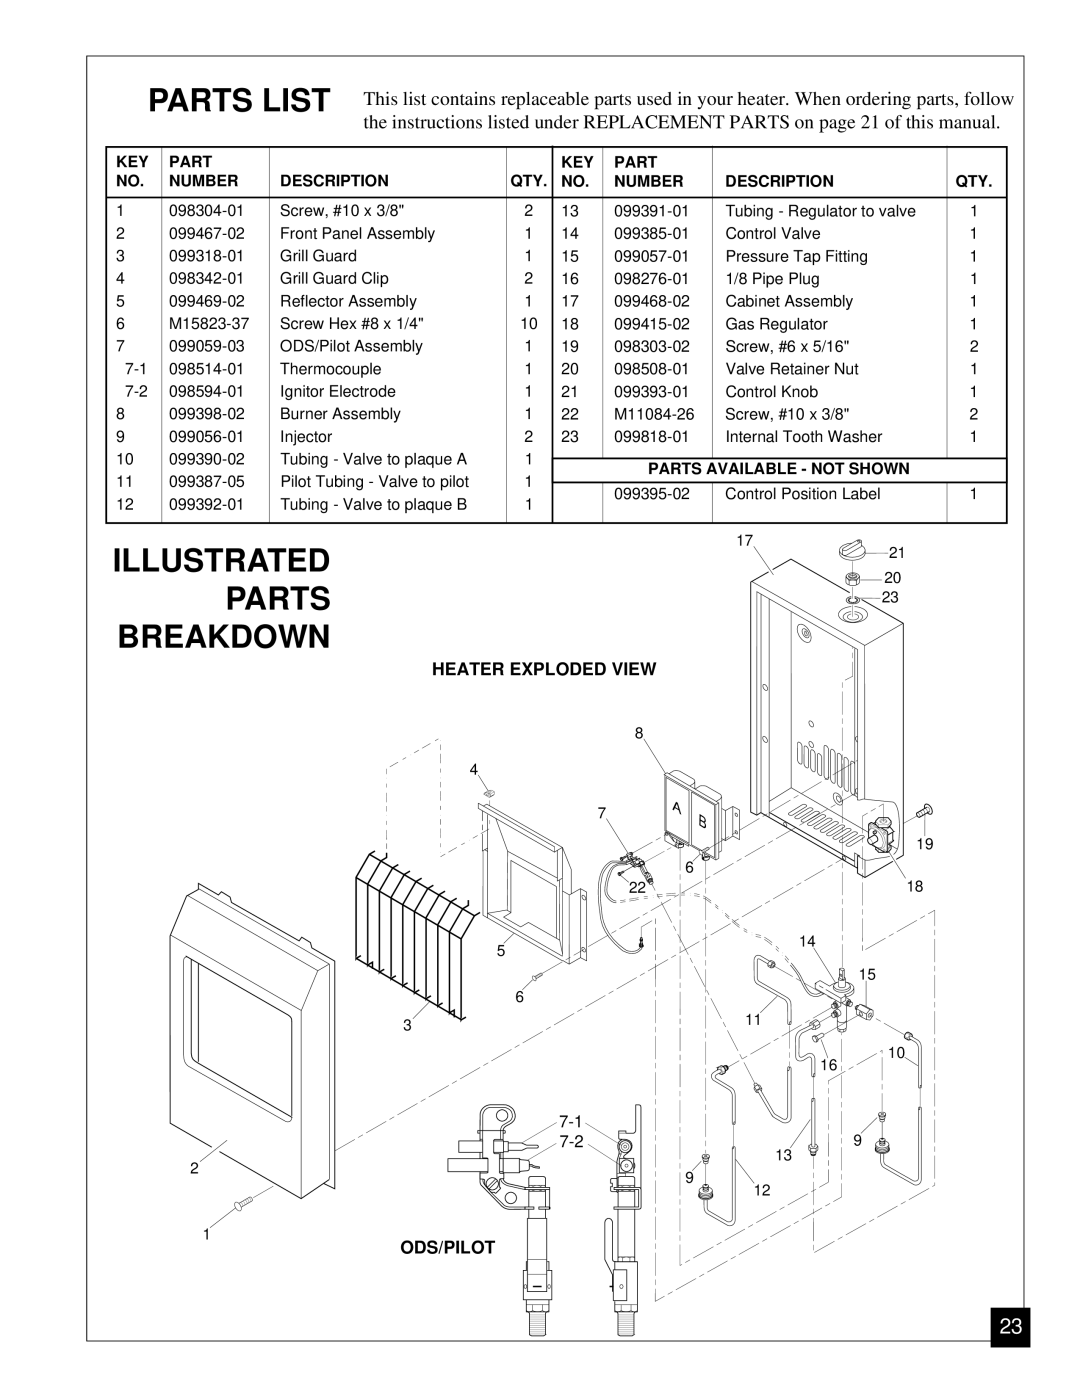 Desa Tech CGP11 installation manual Parts List, Illustrated Parts Breakdown 